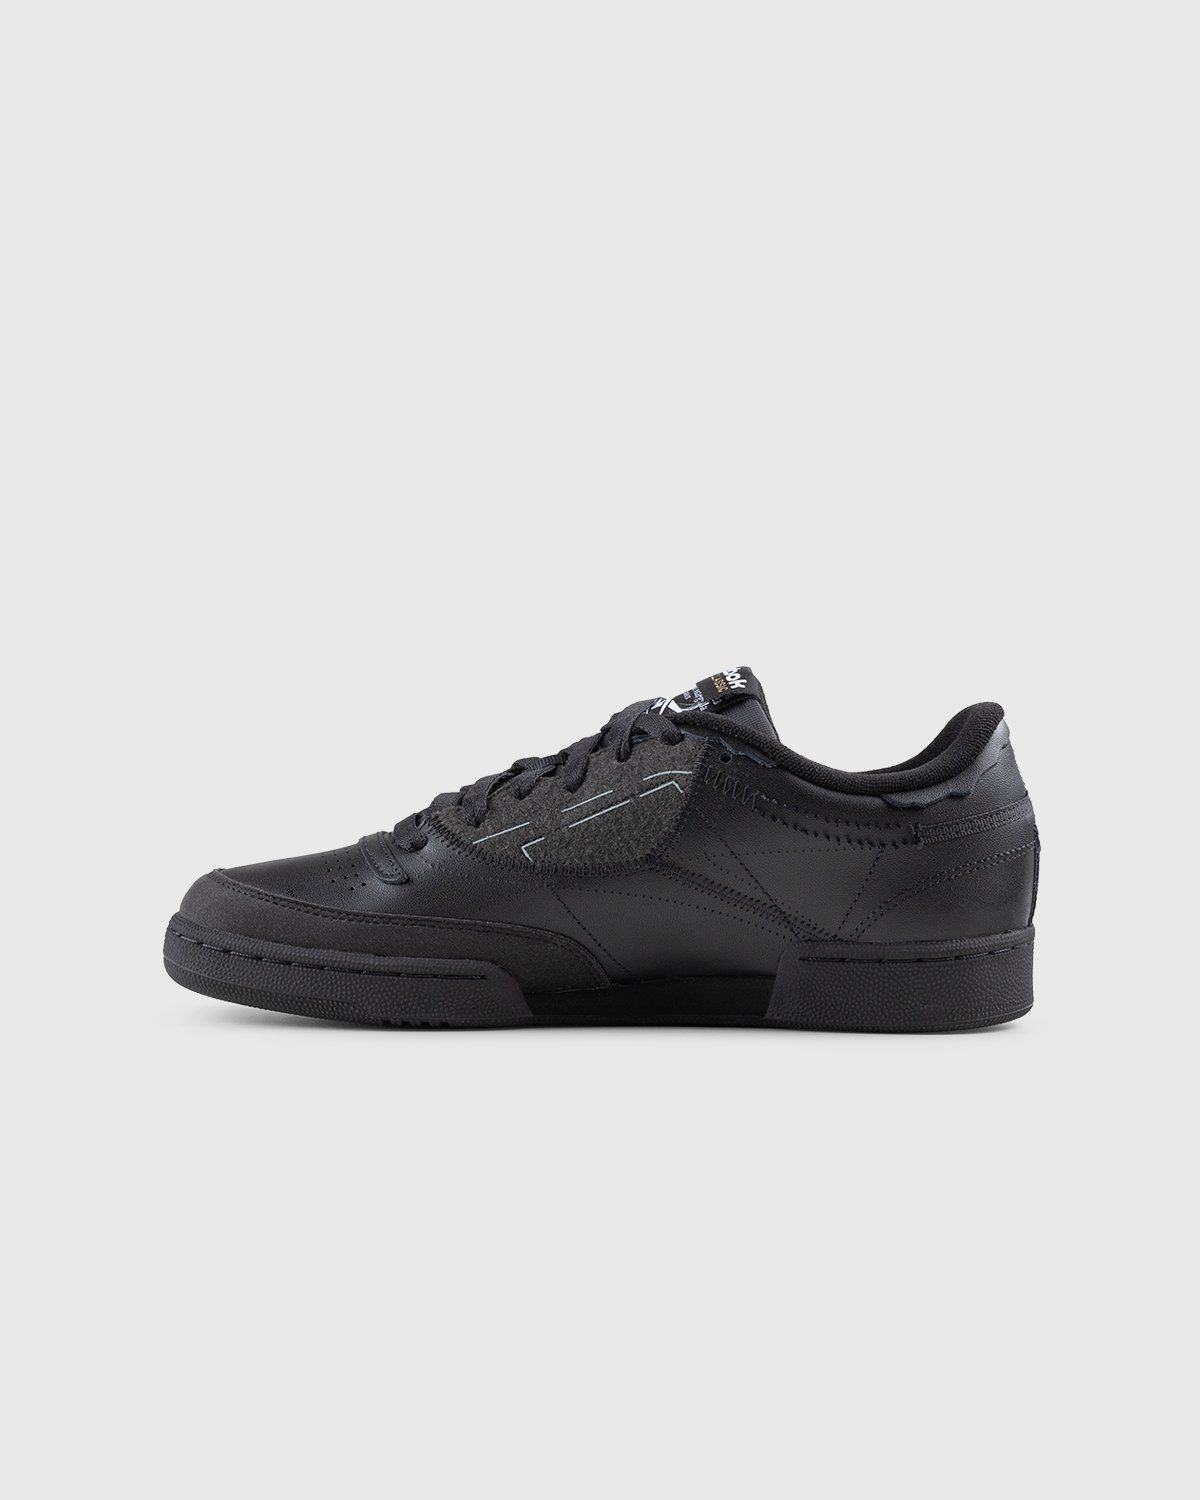 Maison Margiela x Reebok – Club C Memory Of Black/Footwear White/Black - Sneakers - Black - Image 2